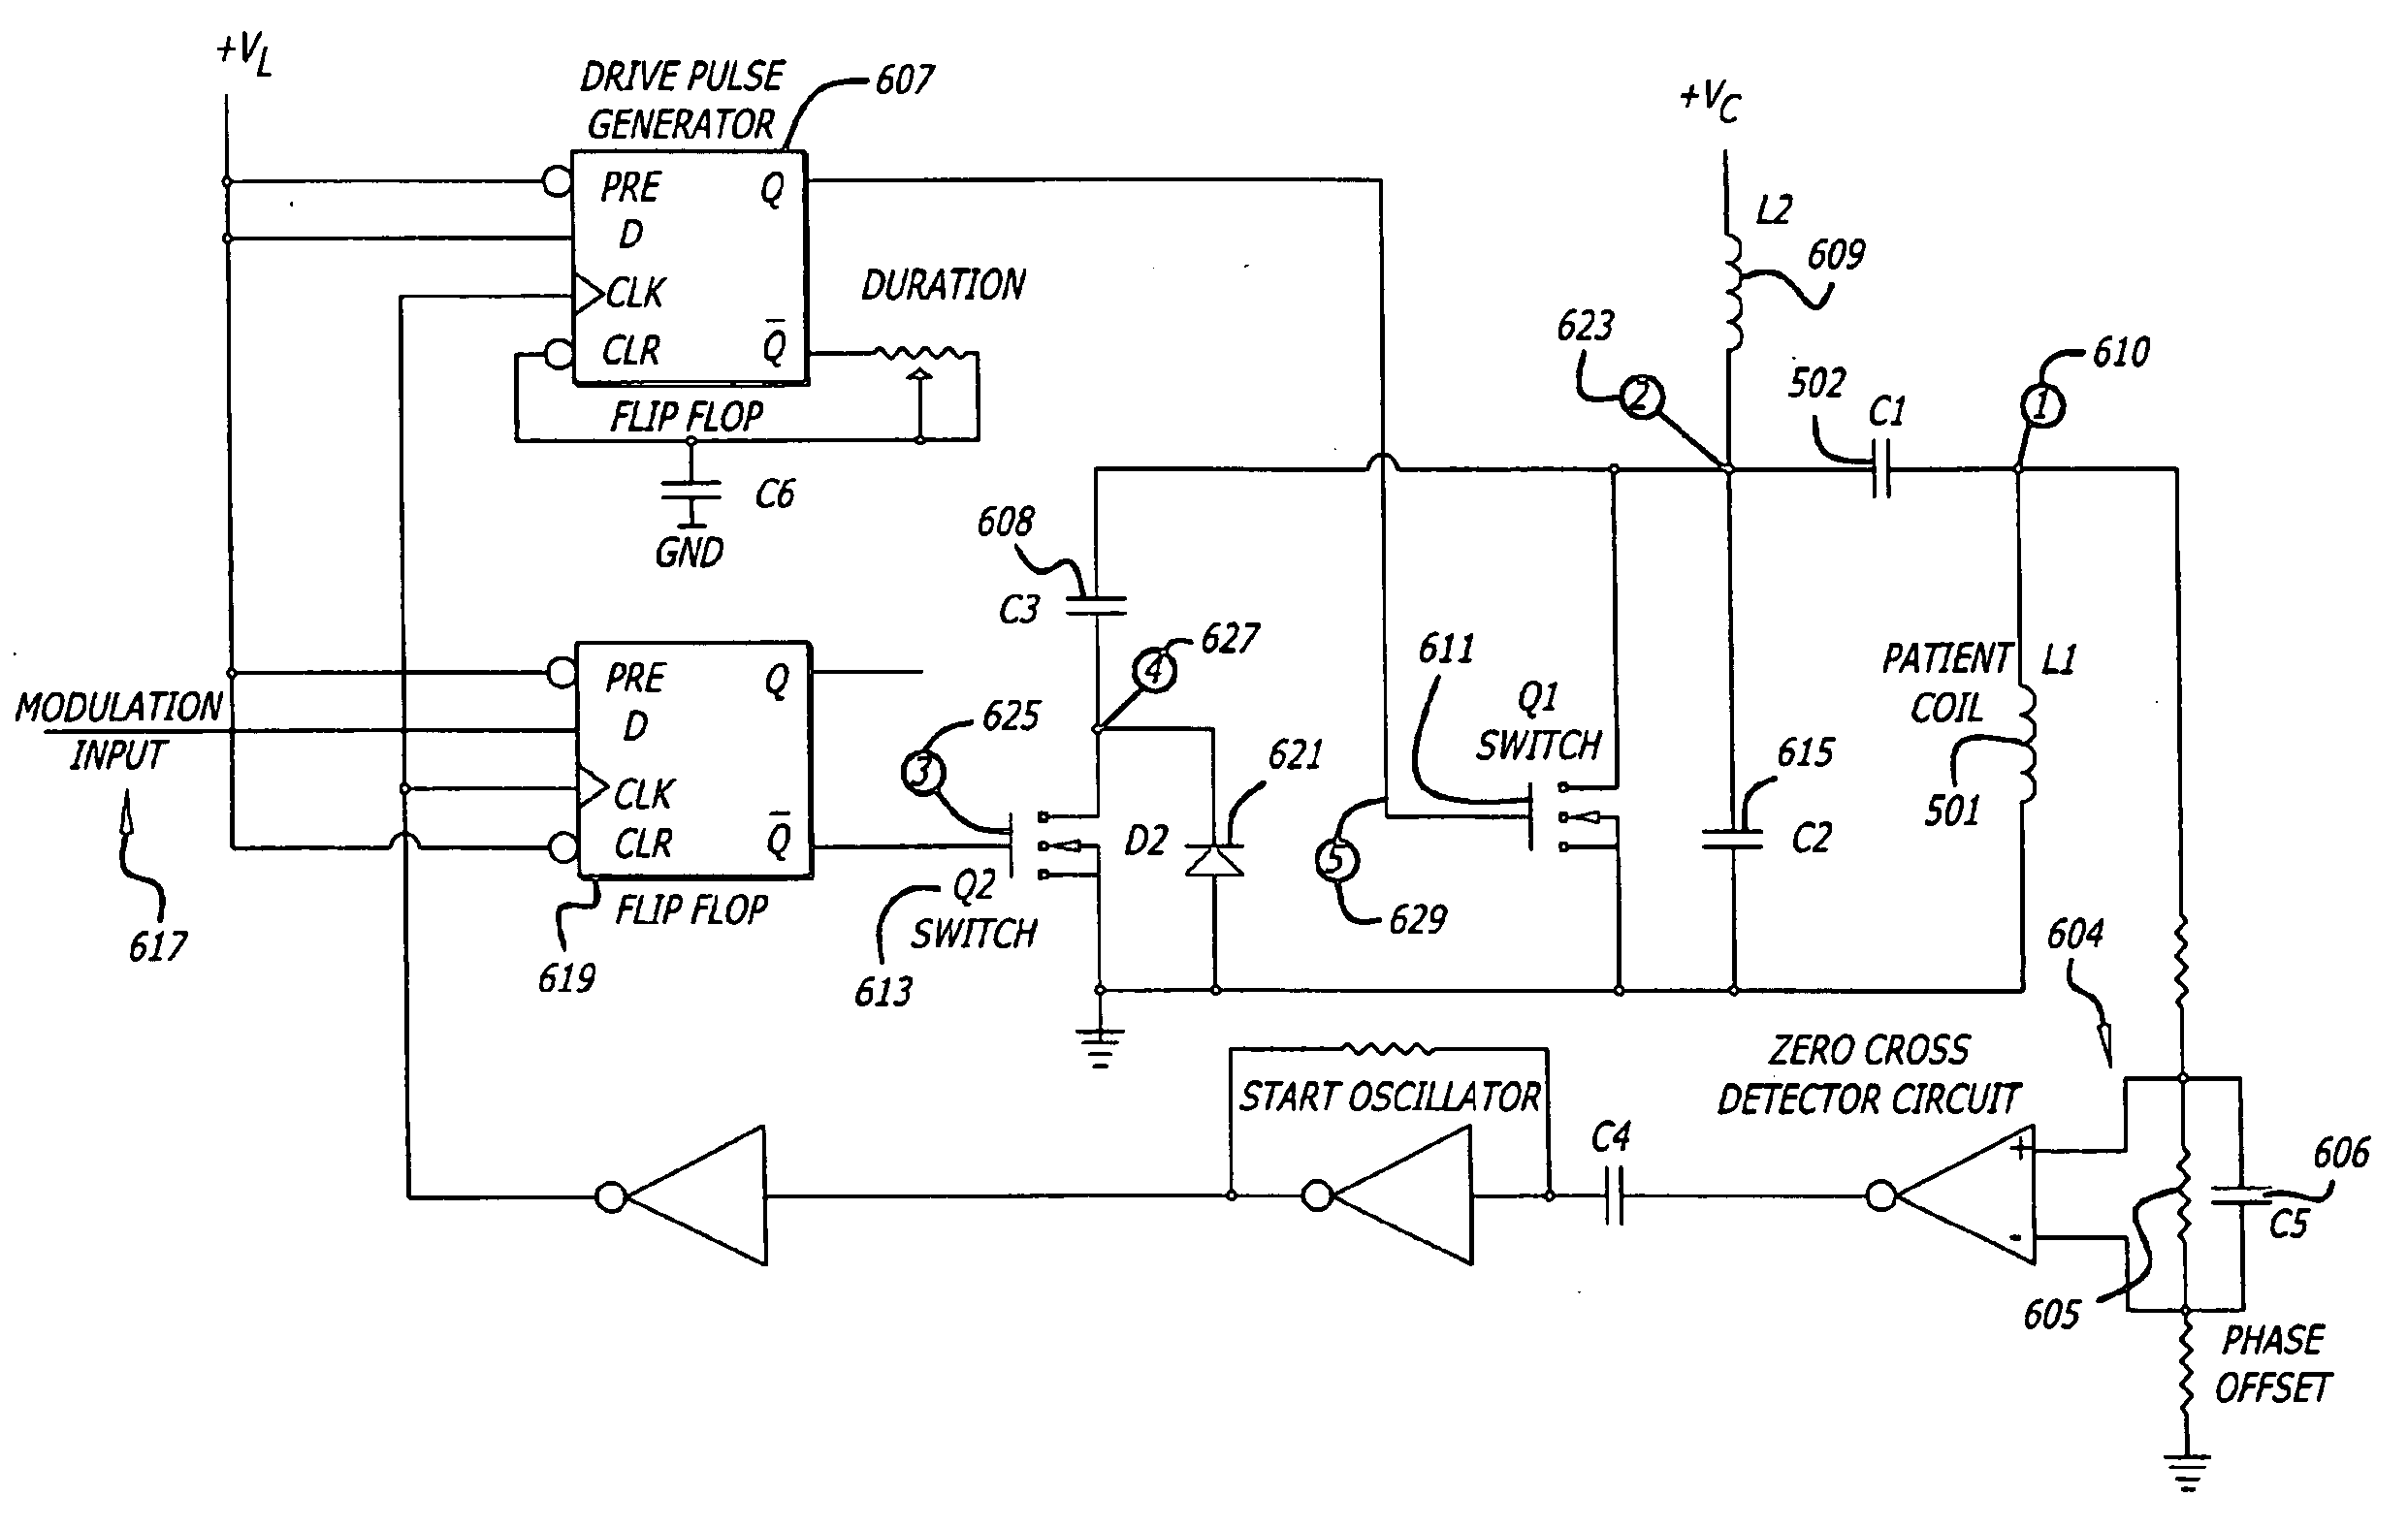 Switched reactance modulated E-class oscillator